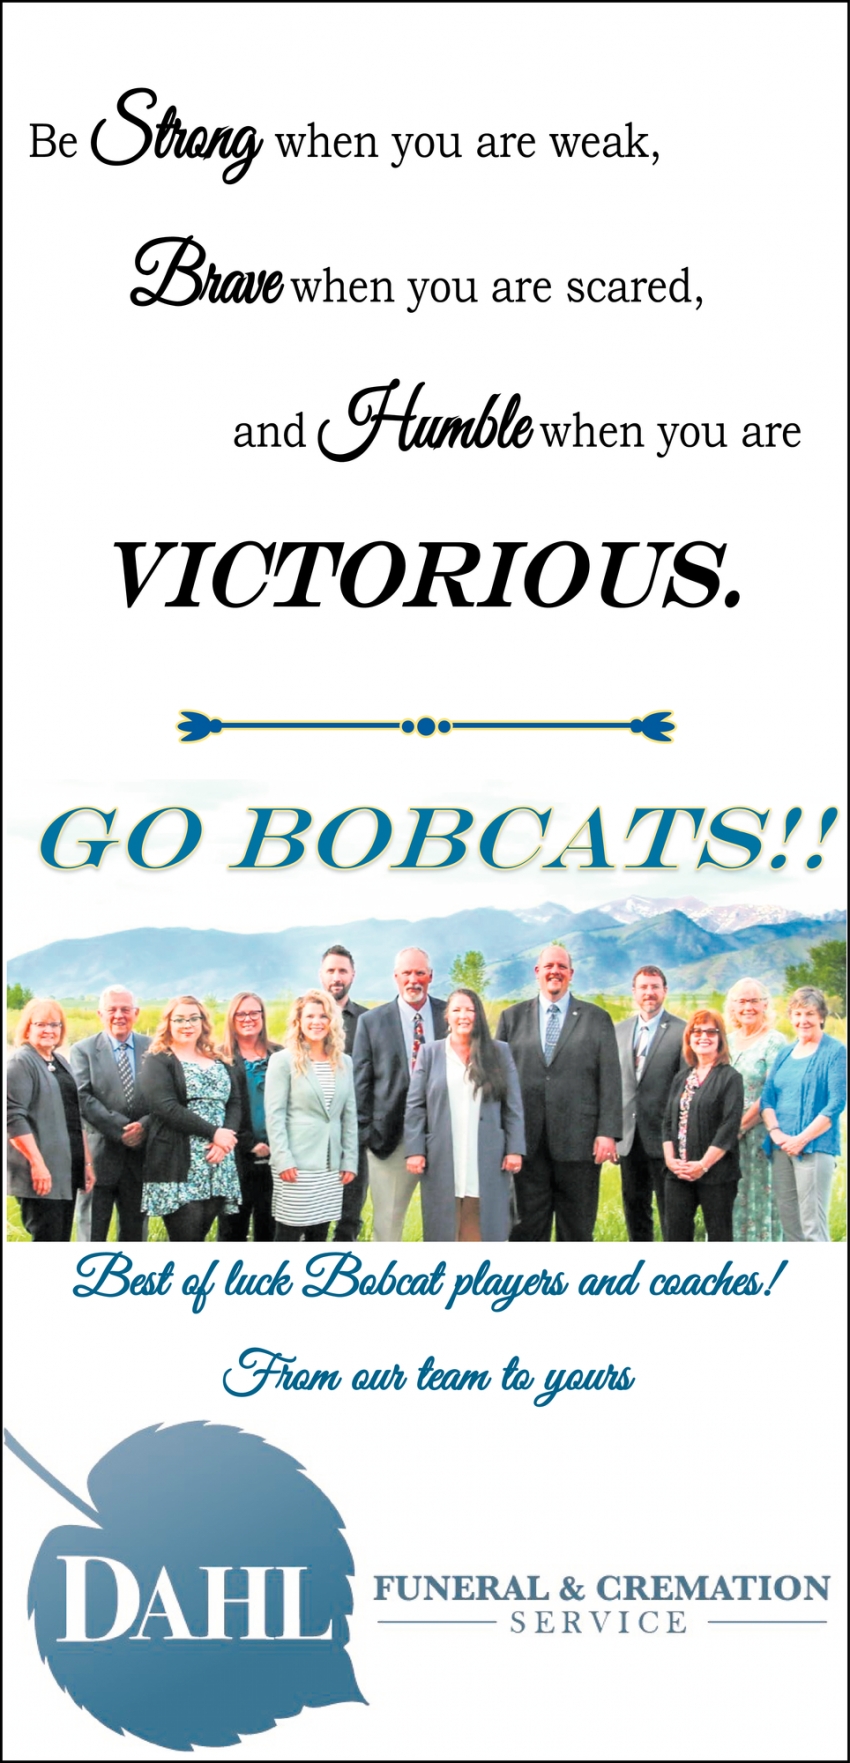 Go Bobcats!